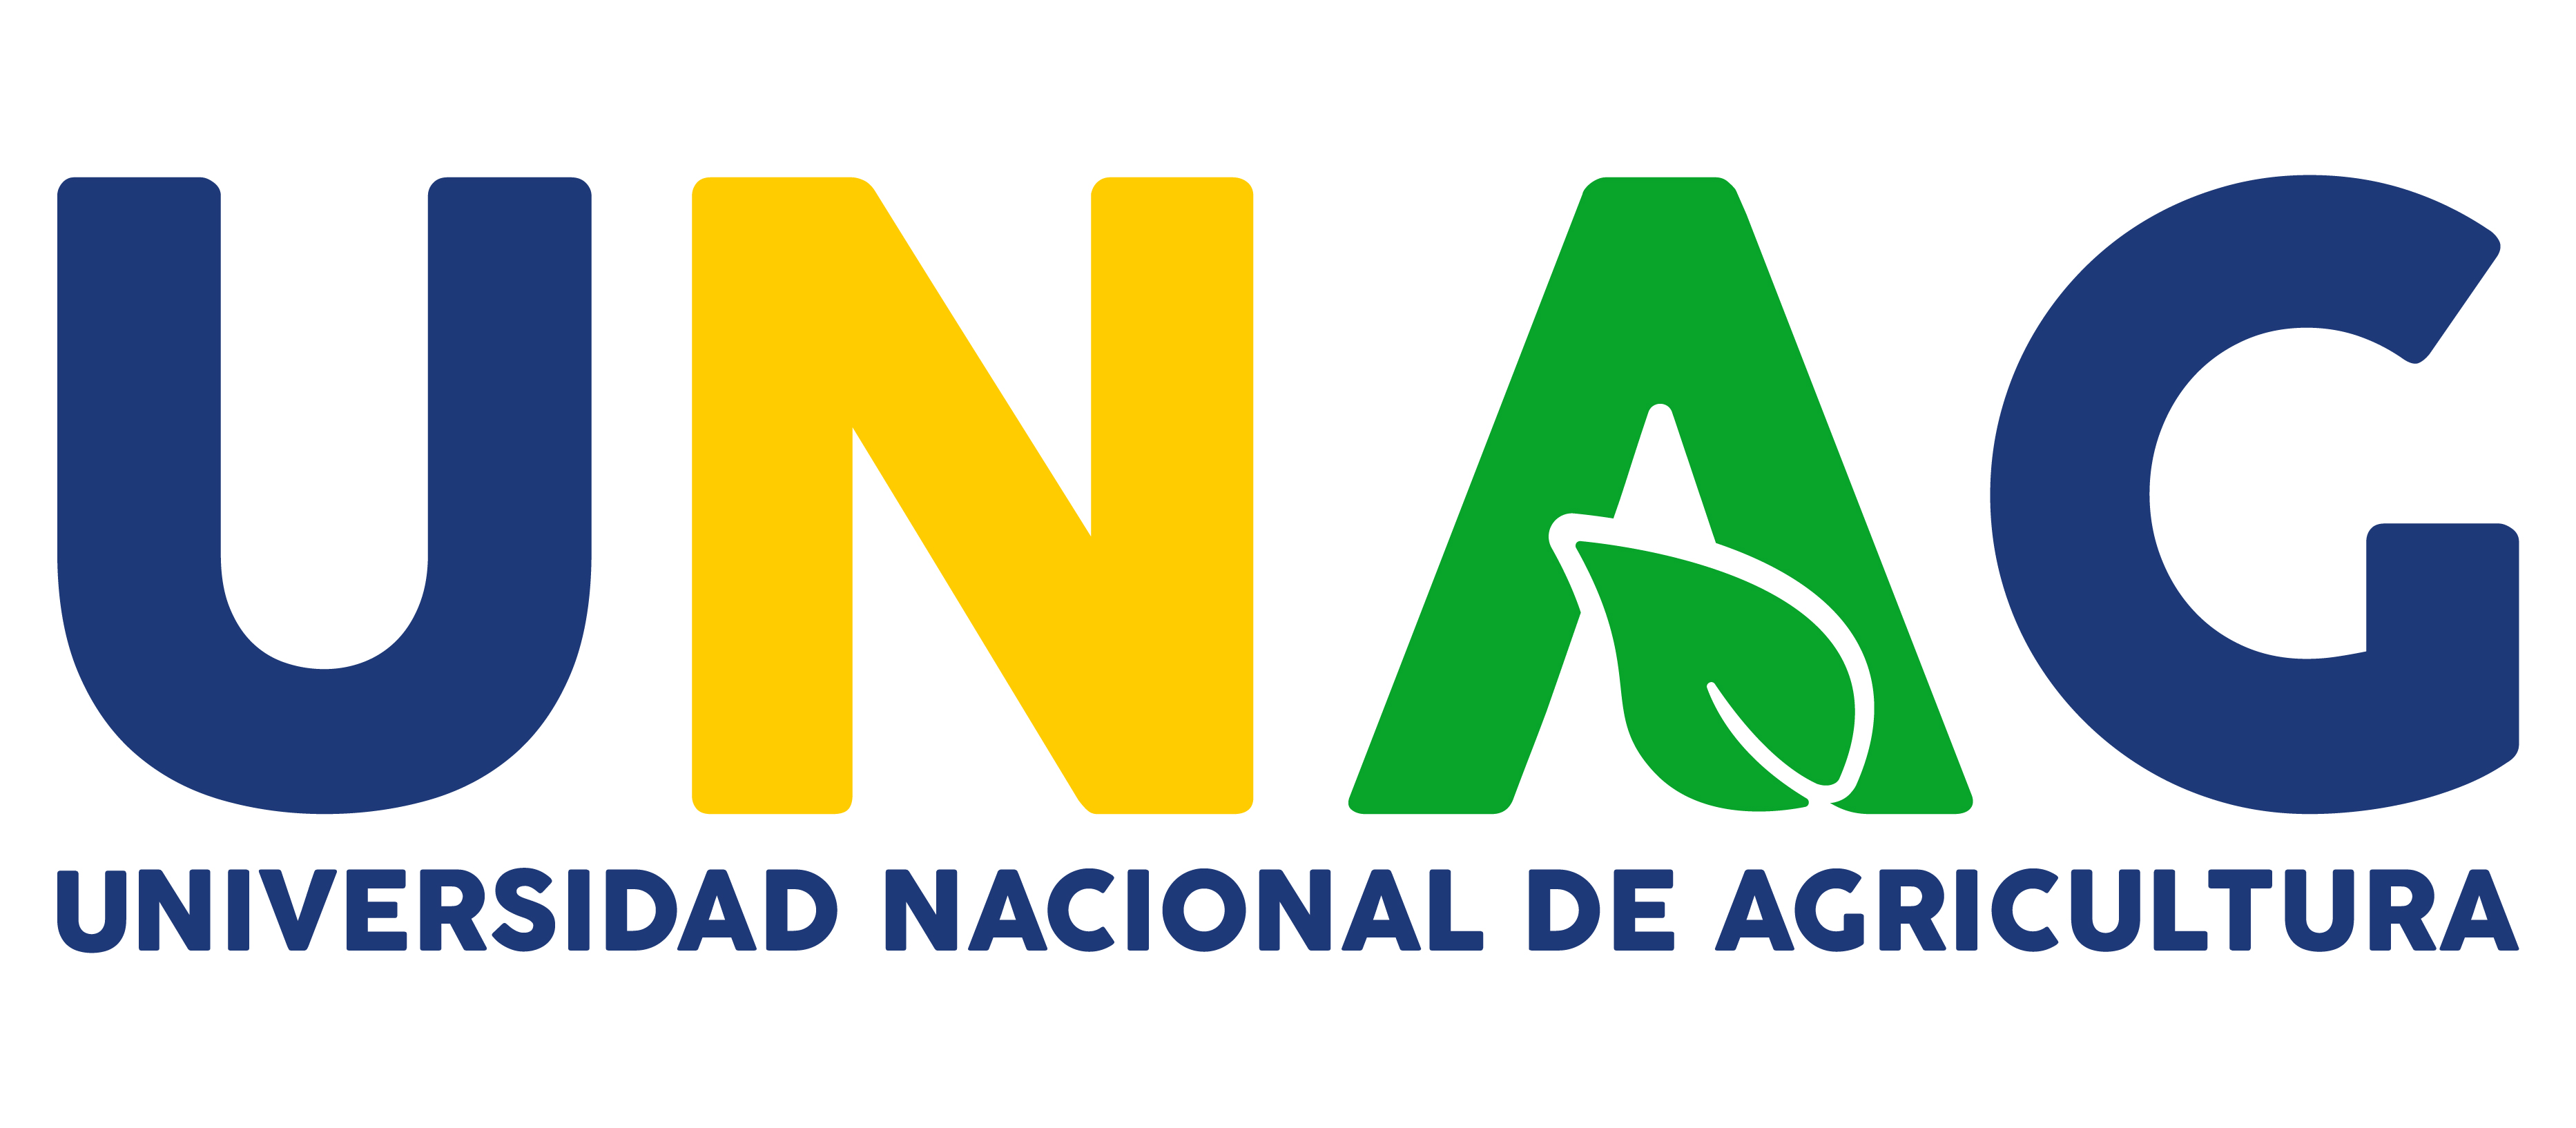 Universidad Nacional de Agricultura